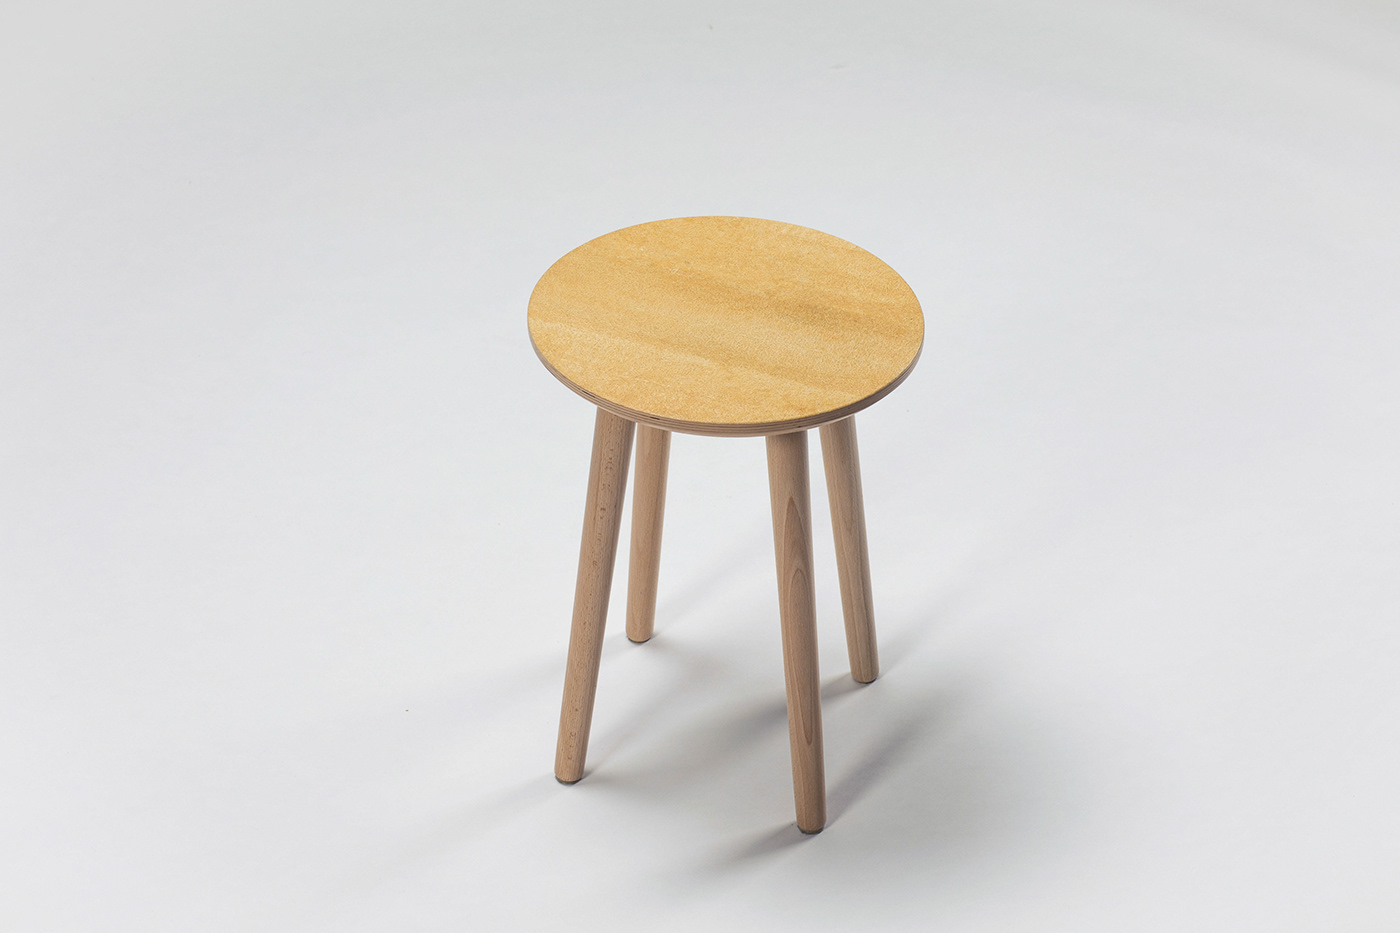 Chenliang design designer furniture luffa MINGDU Nature reddot stool table